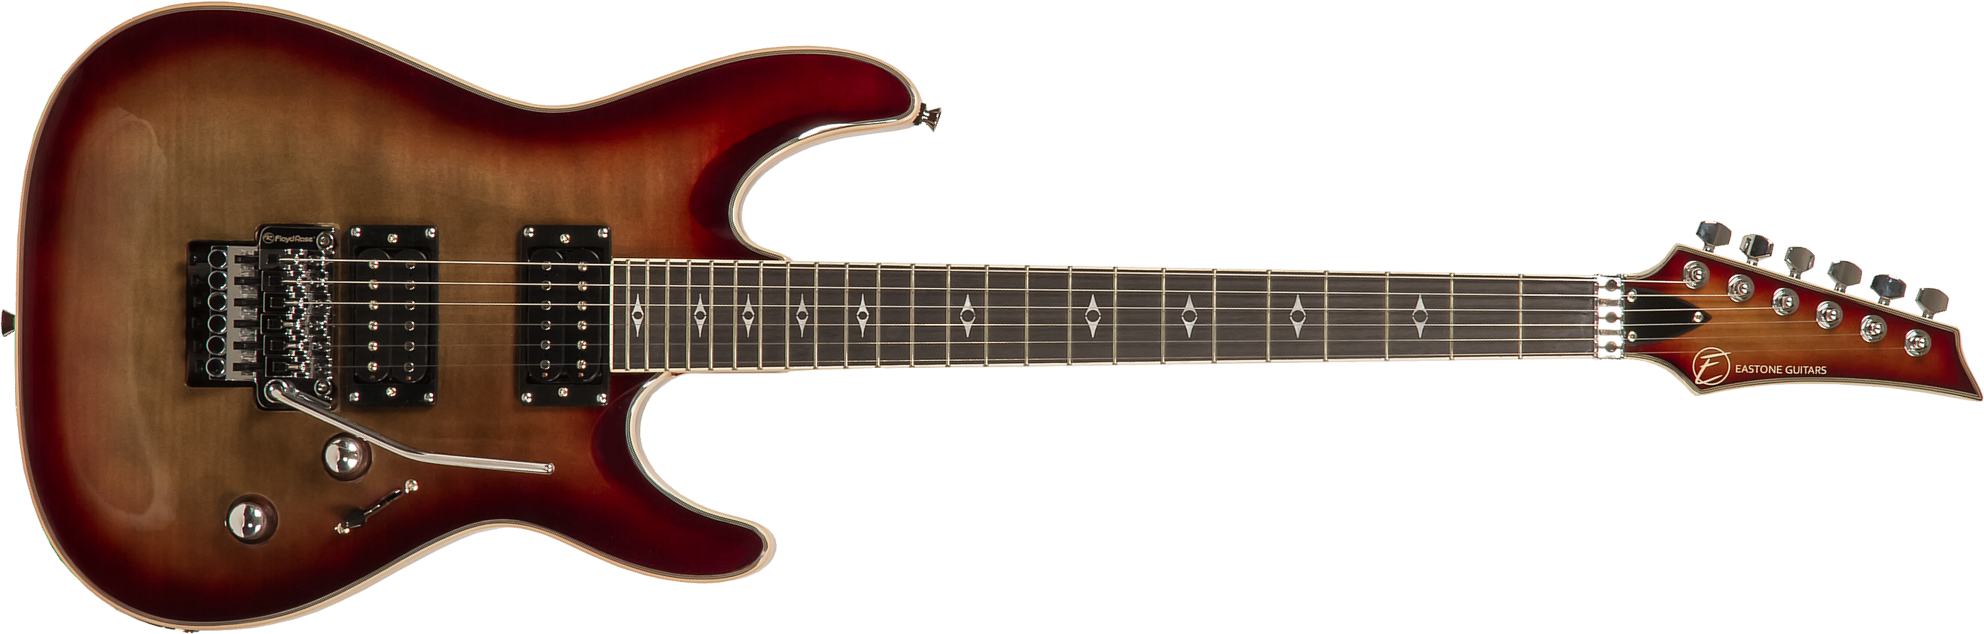 Eastone Metdc100 Hh Fr Pur - Black Flames - Str shape electric guitar - Main picture